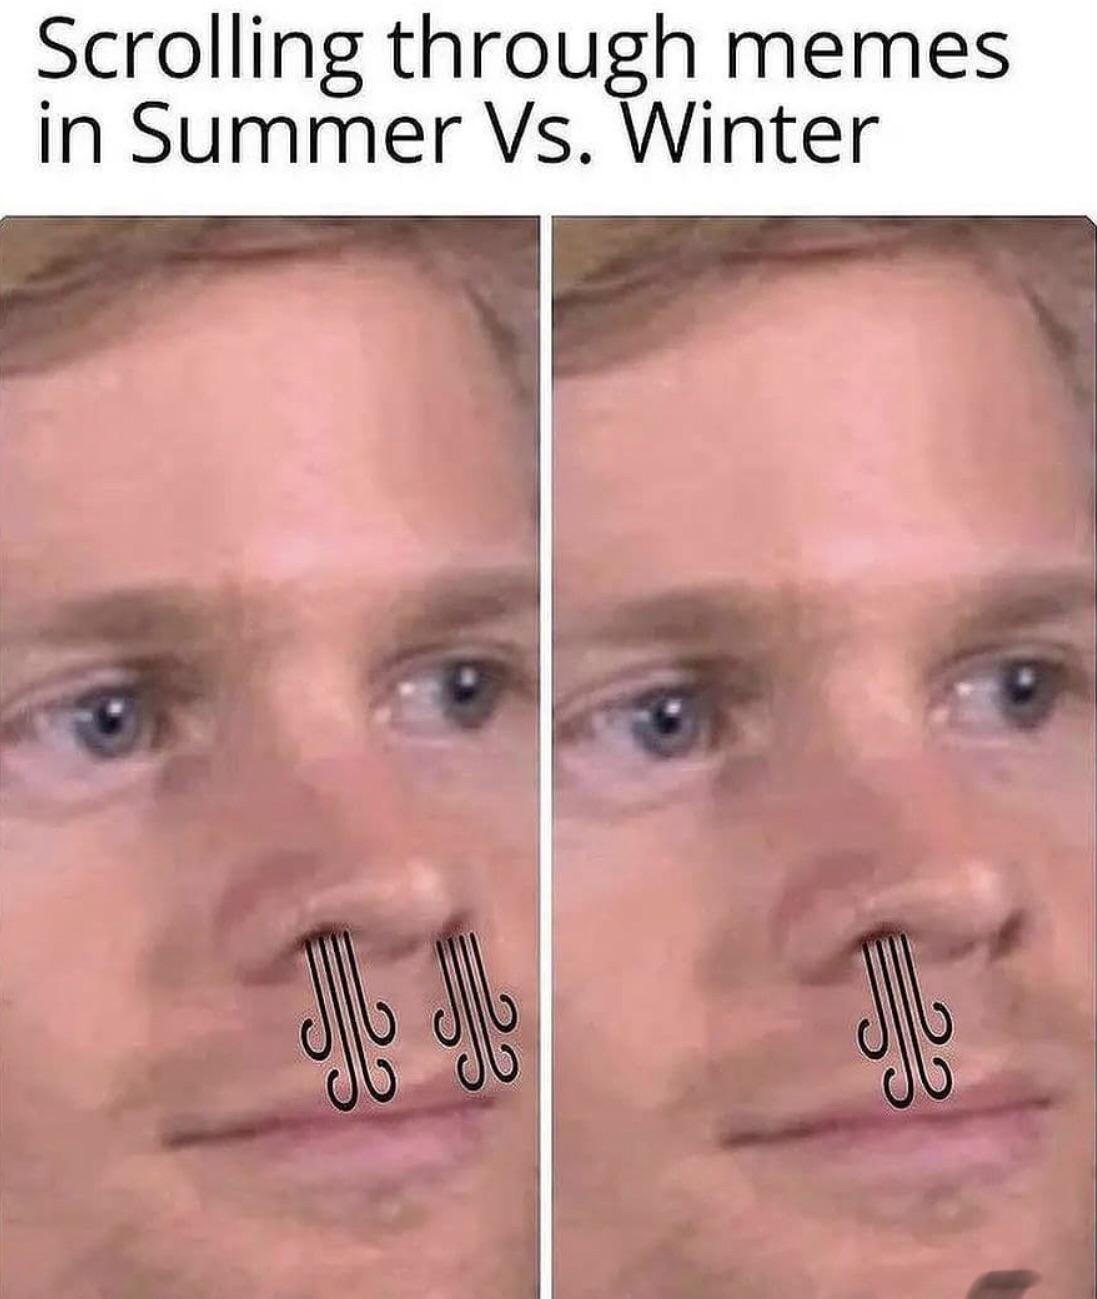 winter vs summer memes - Scrolling through memes in Summer Vs. Winter s